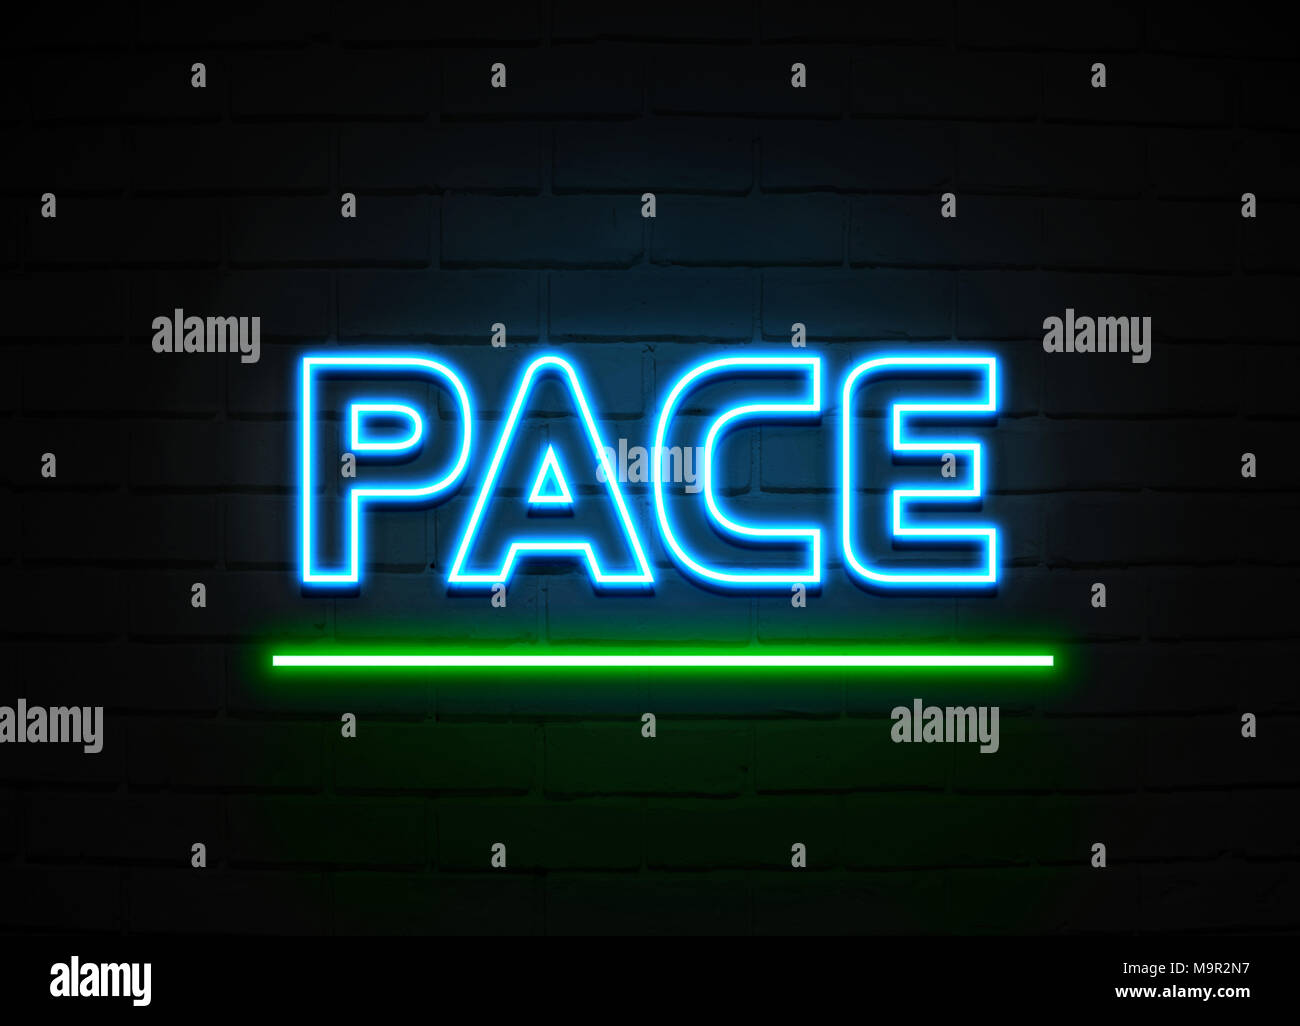 Tempo Leuchtreklame - glühende Leuchtreklame auf brickwall Wand - 3D-Royalty Free Stock Illustration dargestellt. Stockfoto